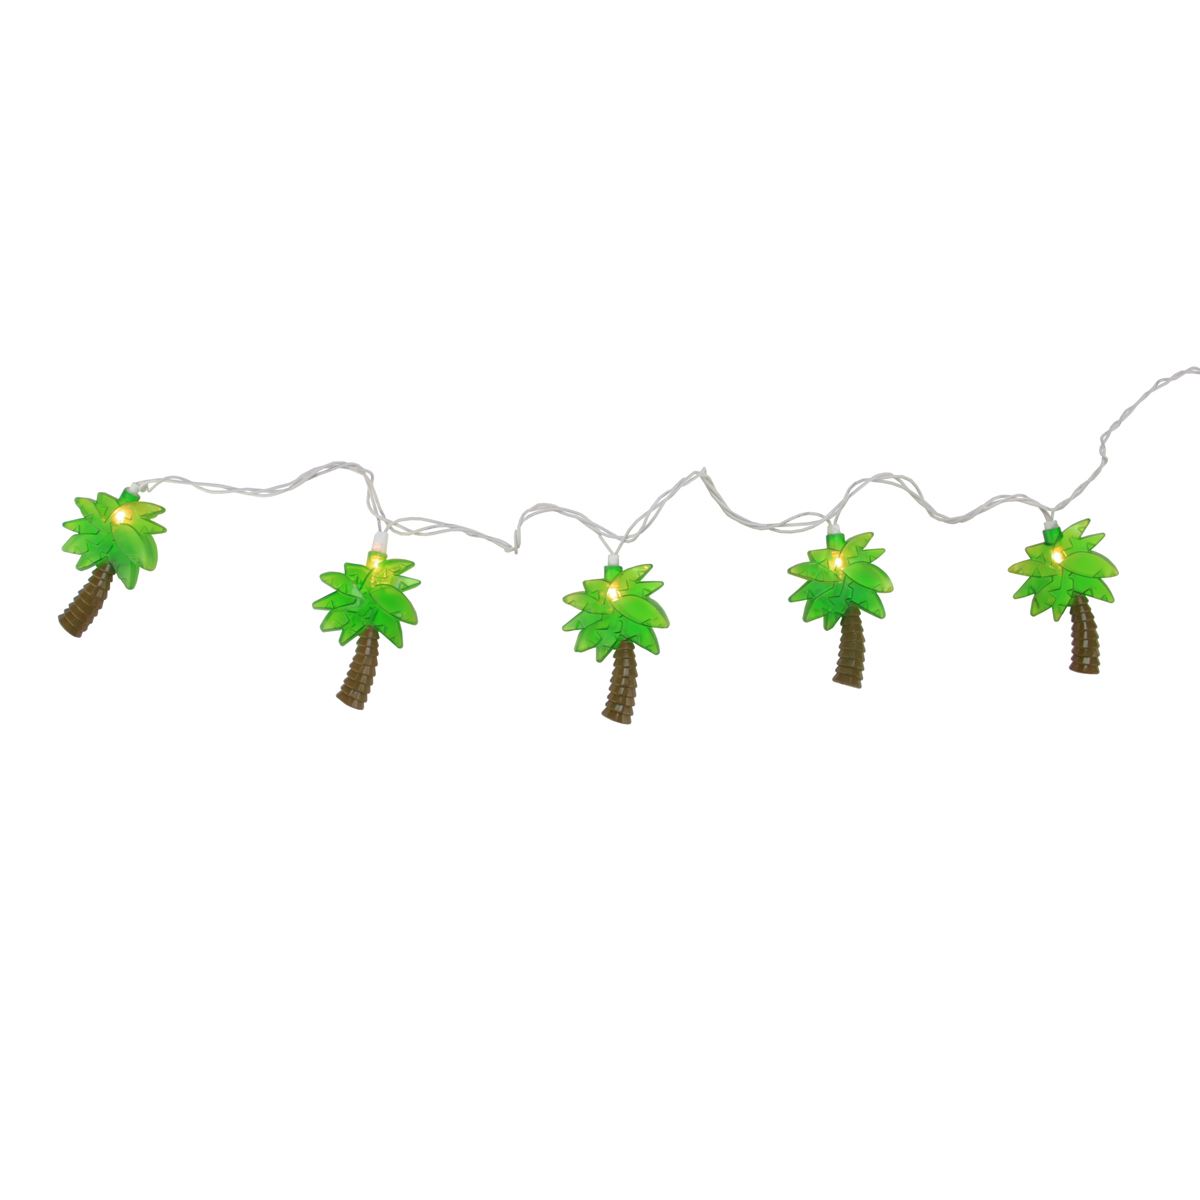 Northlight Seasonal Palm Tree Novelty Patio Lights - Set Of 10